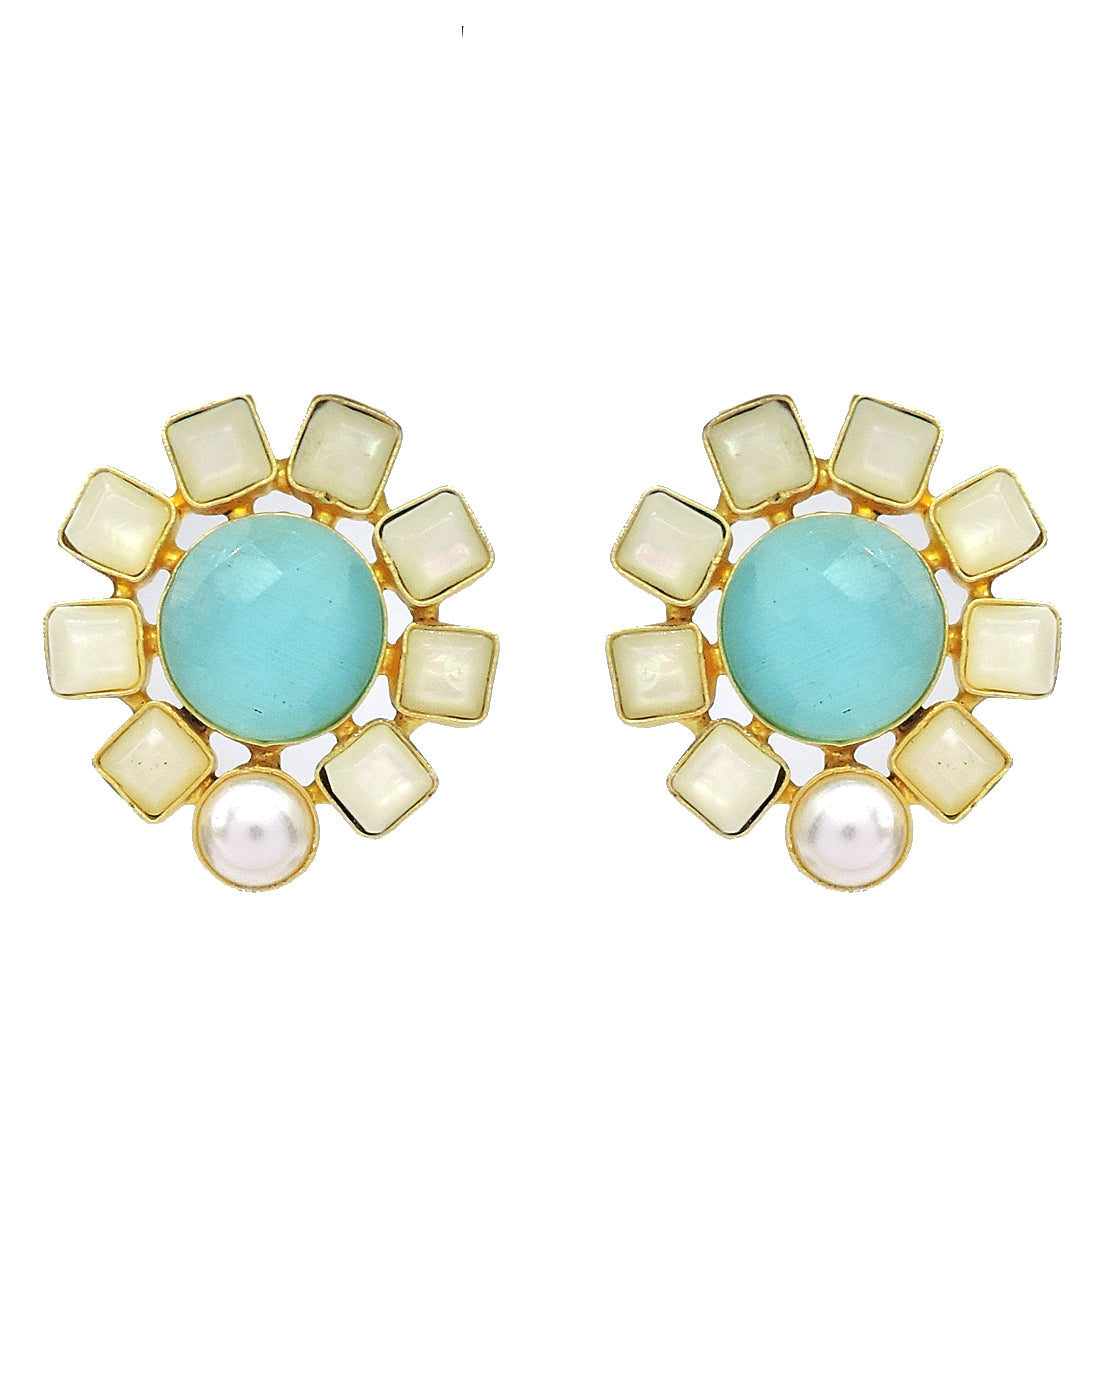 Blue & White Flower Earrings - Statement Earrings - Gold-Plated & Hypoallergenic Jewellery - Made in India - Dubai Jewellery - Dori